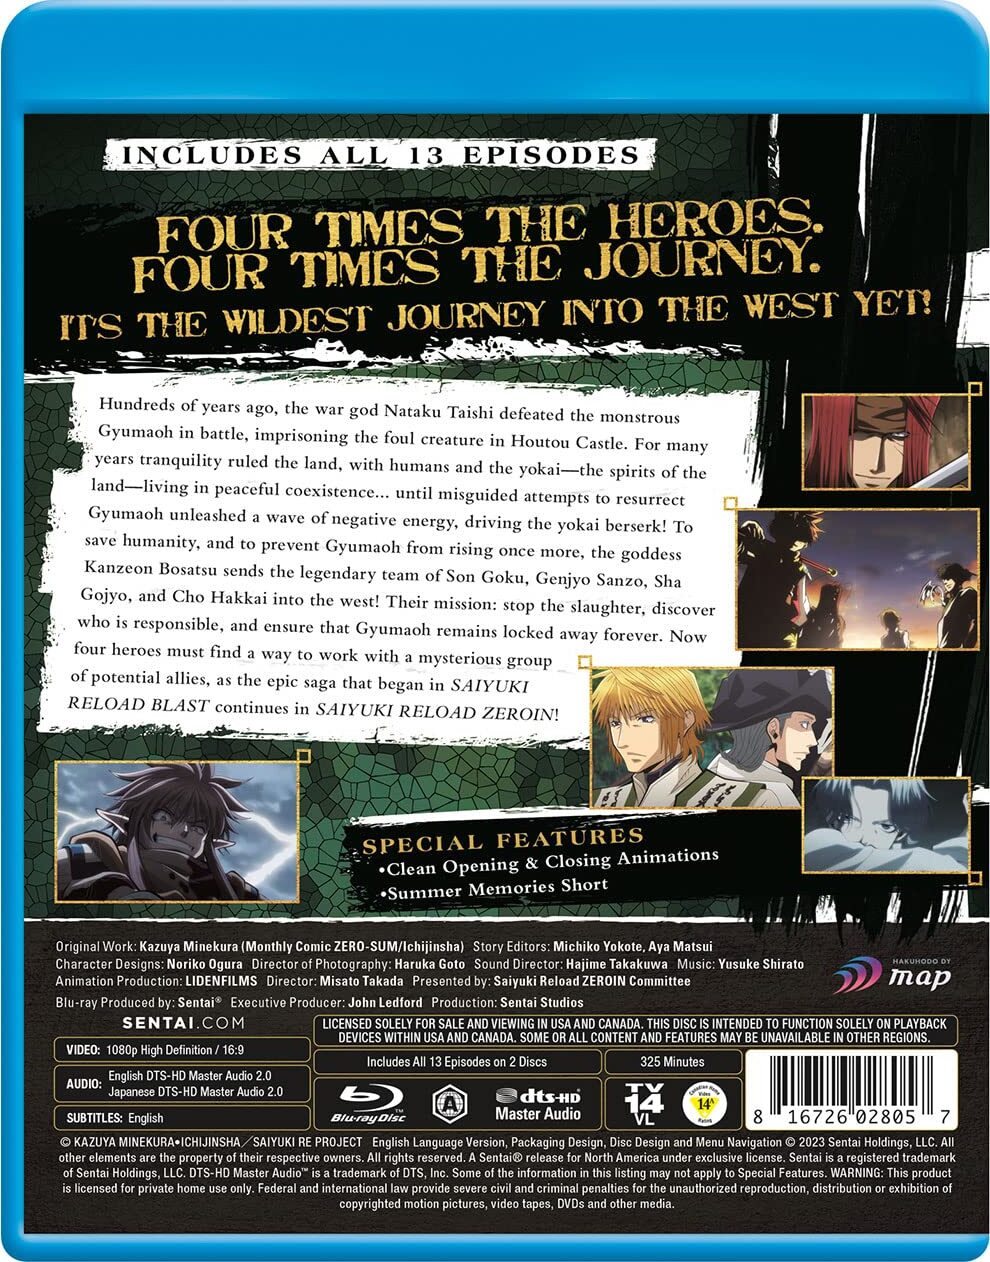 Saiyuki Reload: Zeroin - Complete Collection Blu-ray